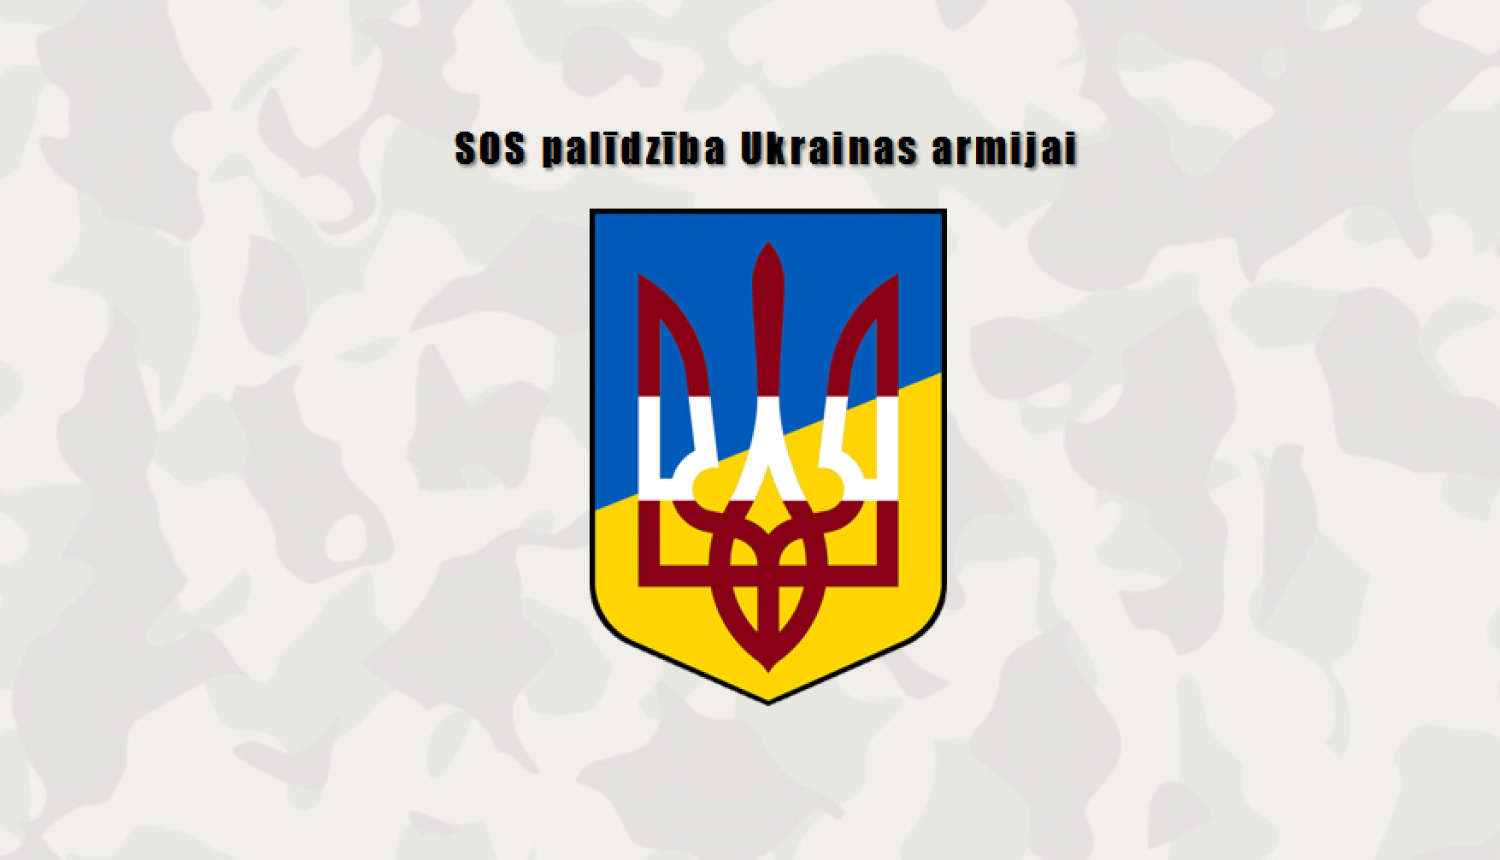 Sos palidzība Ukrainai logo